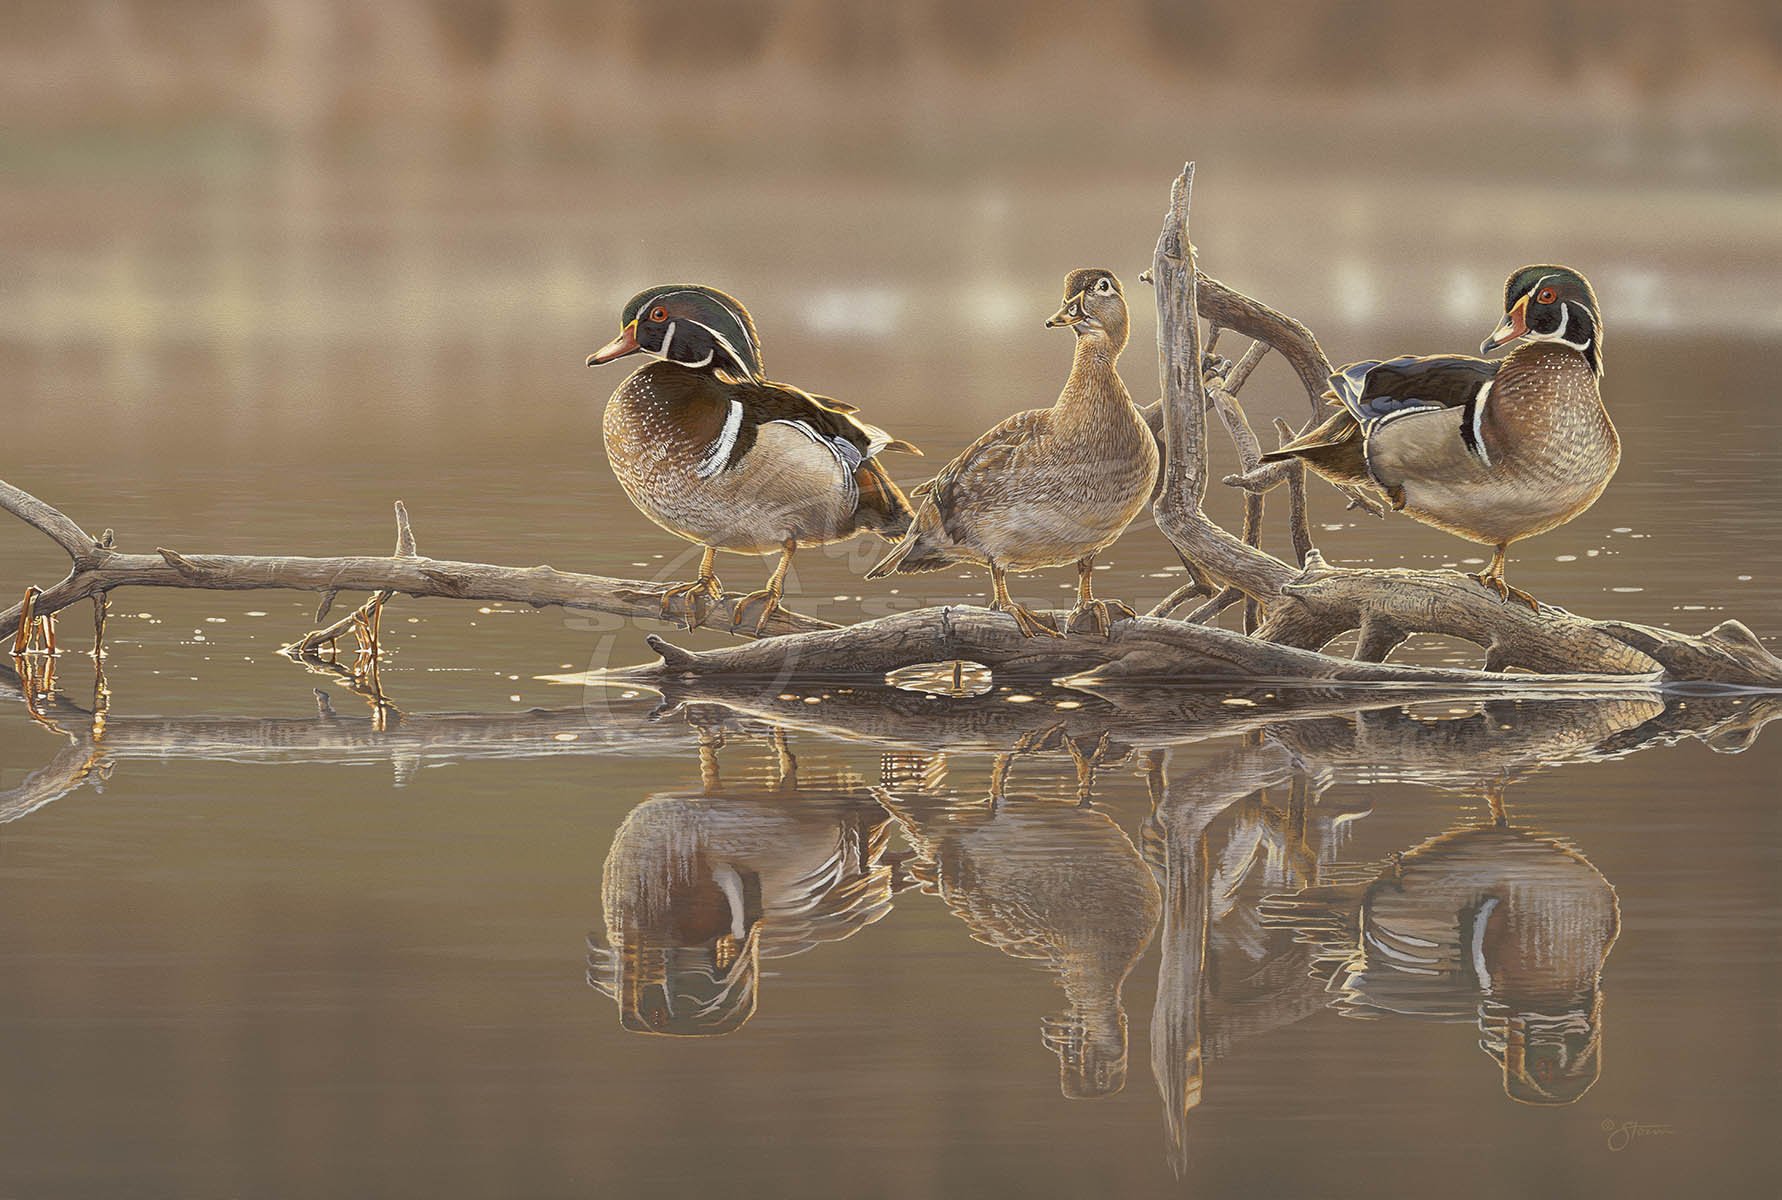 Silent Reflections+wood duck++Scot Storm+waterfowl+wildlife+art+prints+original+painting+duck+ducks unlimited+delta waterfowl.jpg